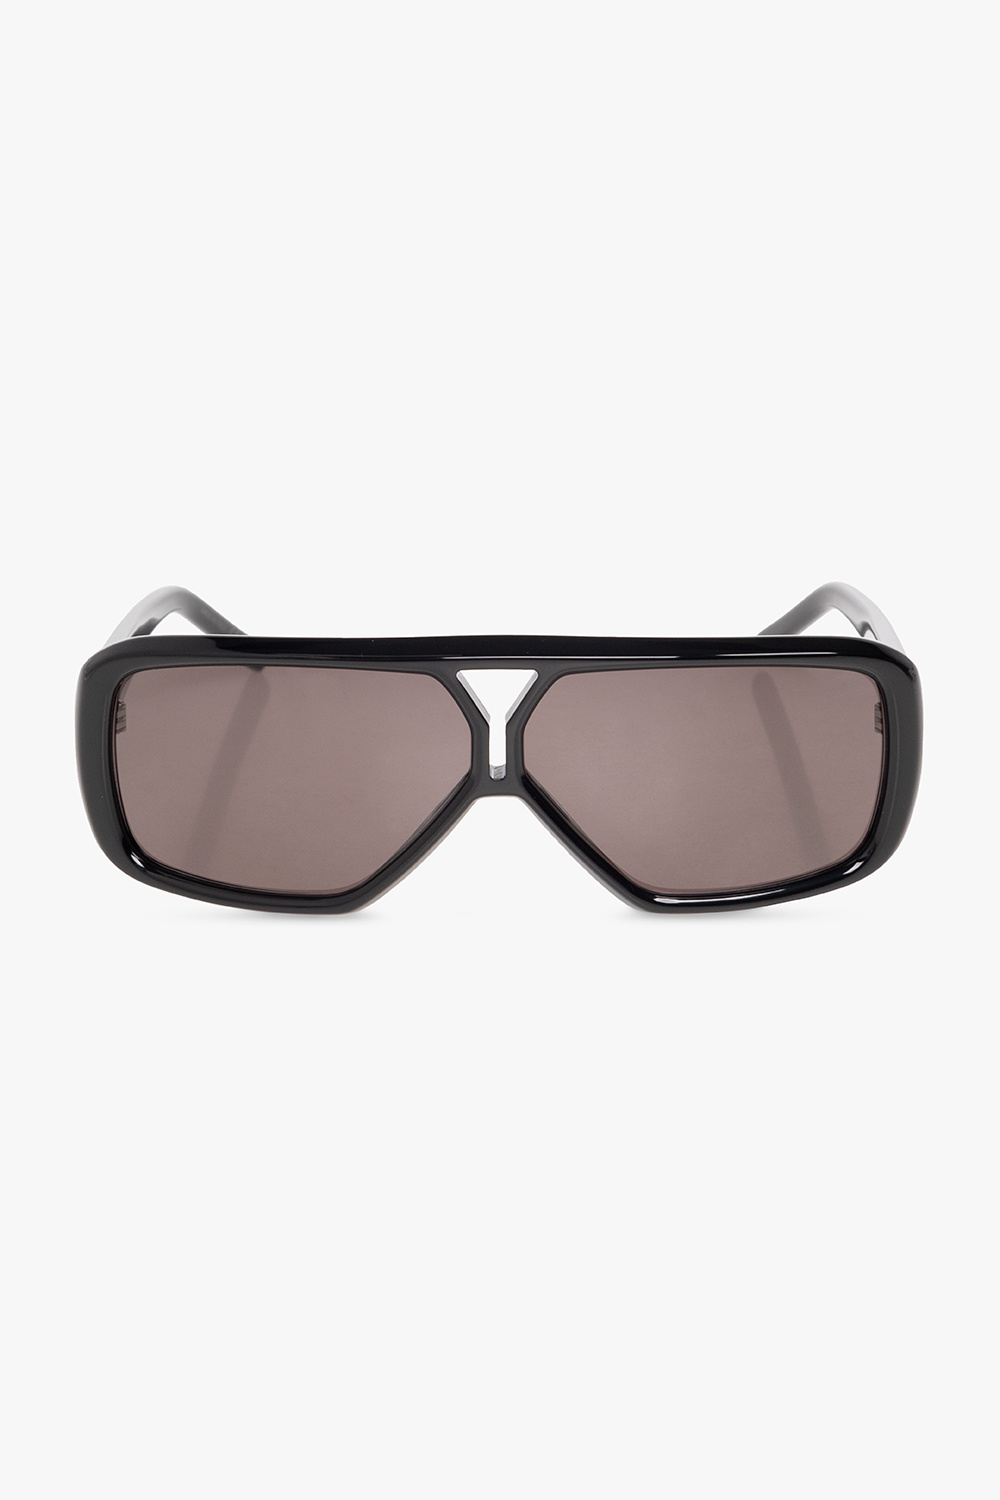 Saint Laurent ‘SL 569 Y’ sunglasses